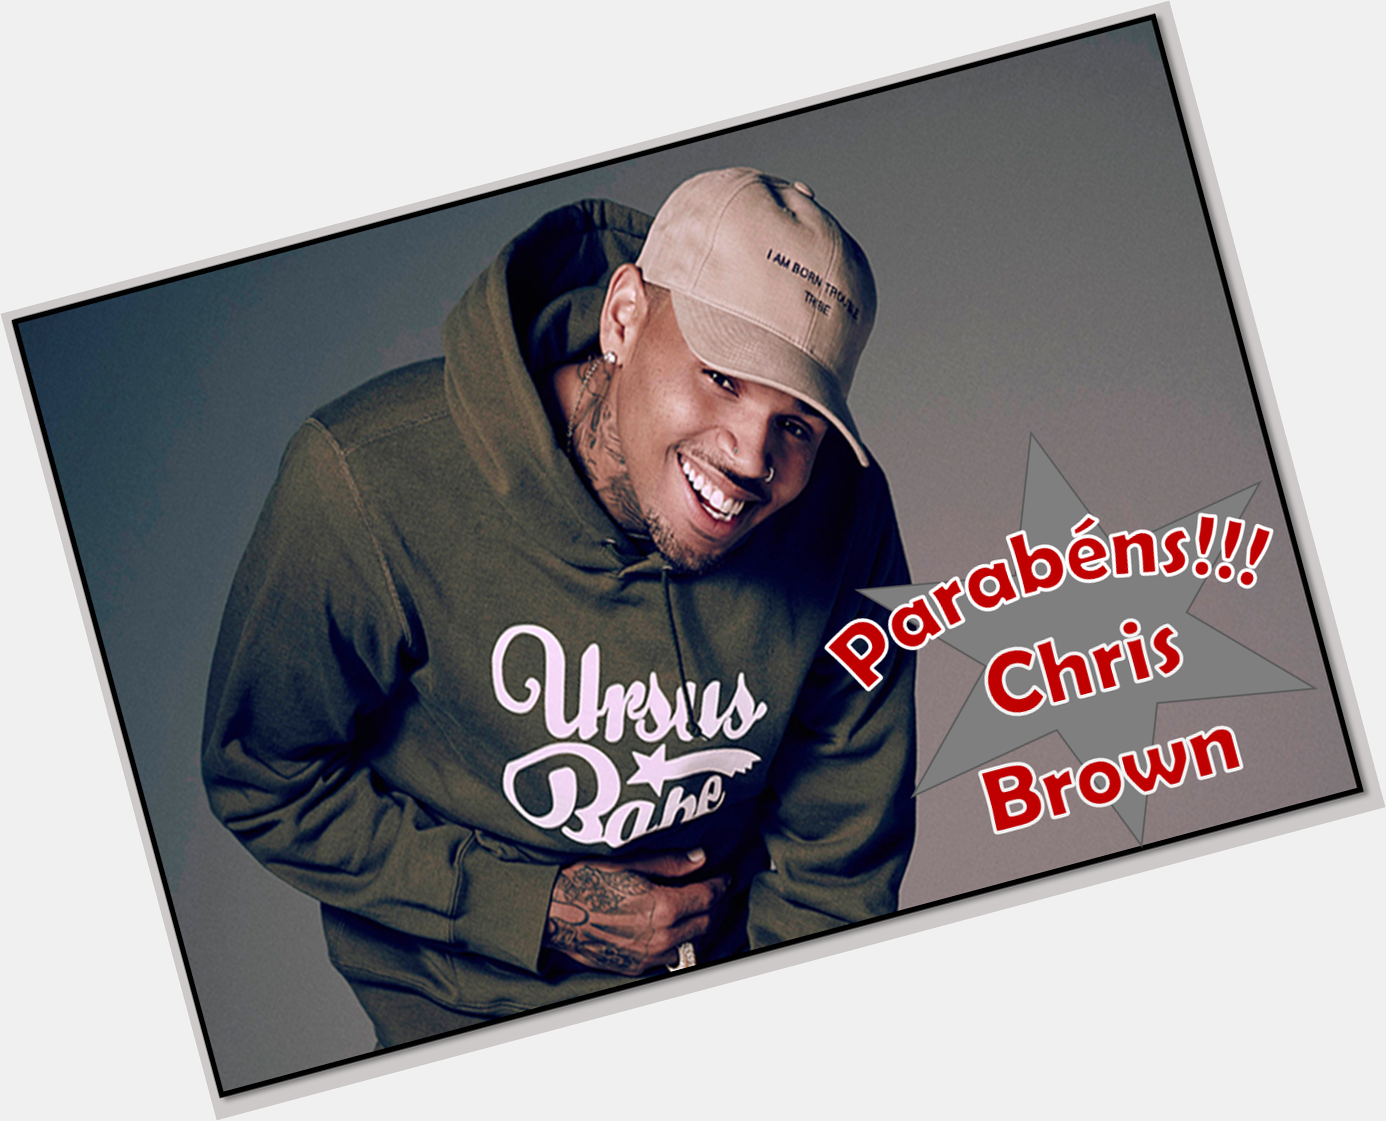 Happy Birthday Chris Brown.     